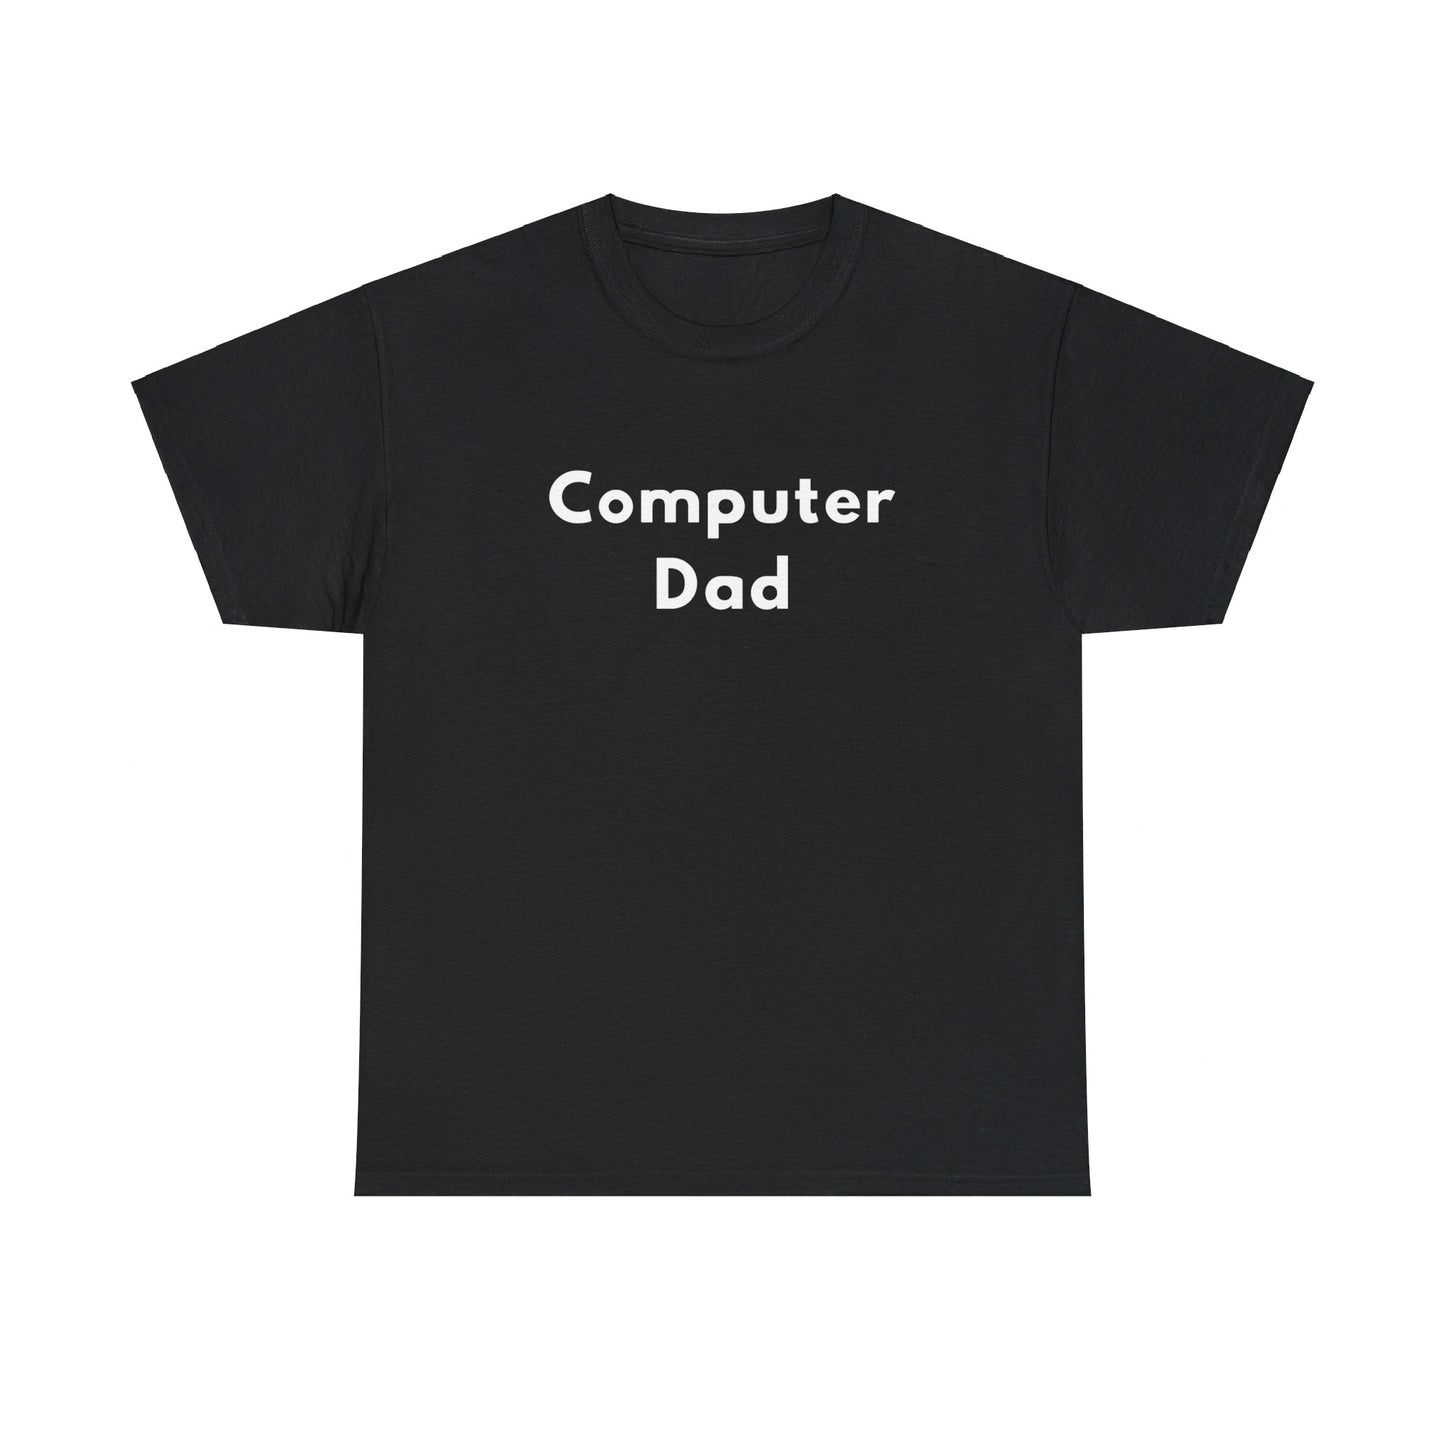 "Computer Dad" Shirt